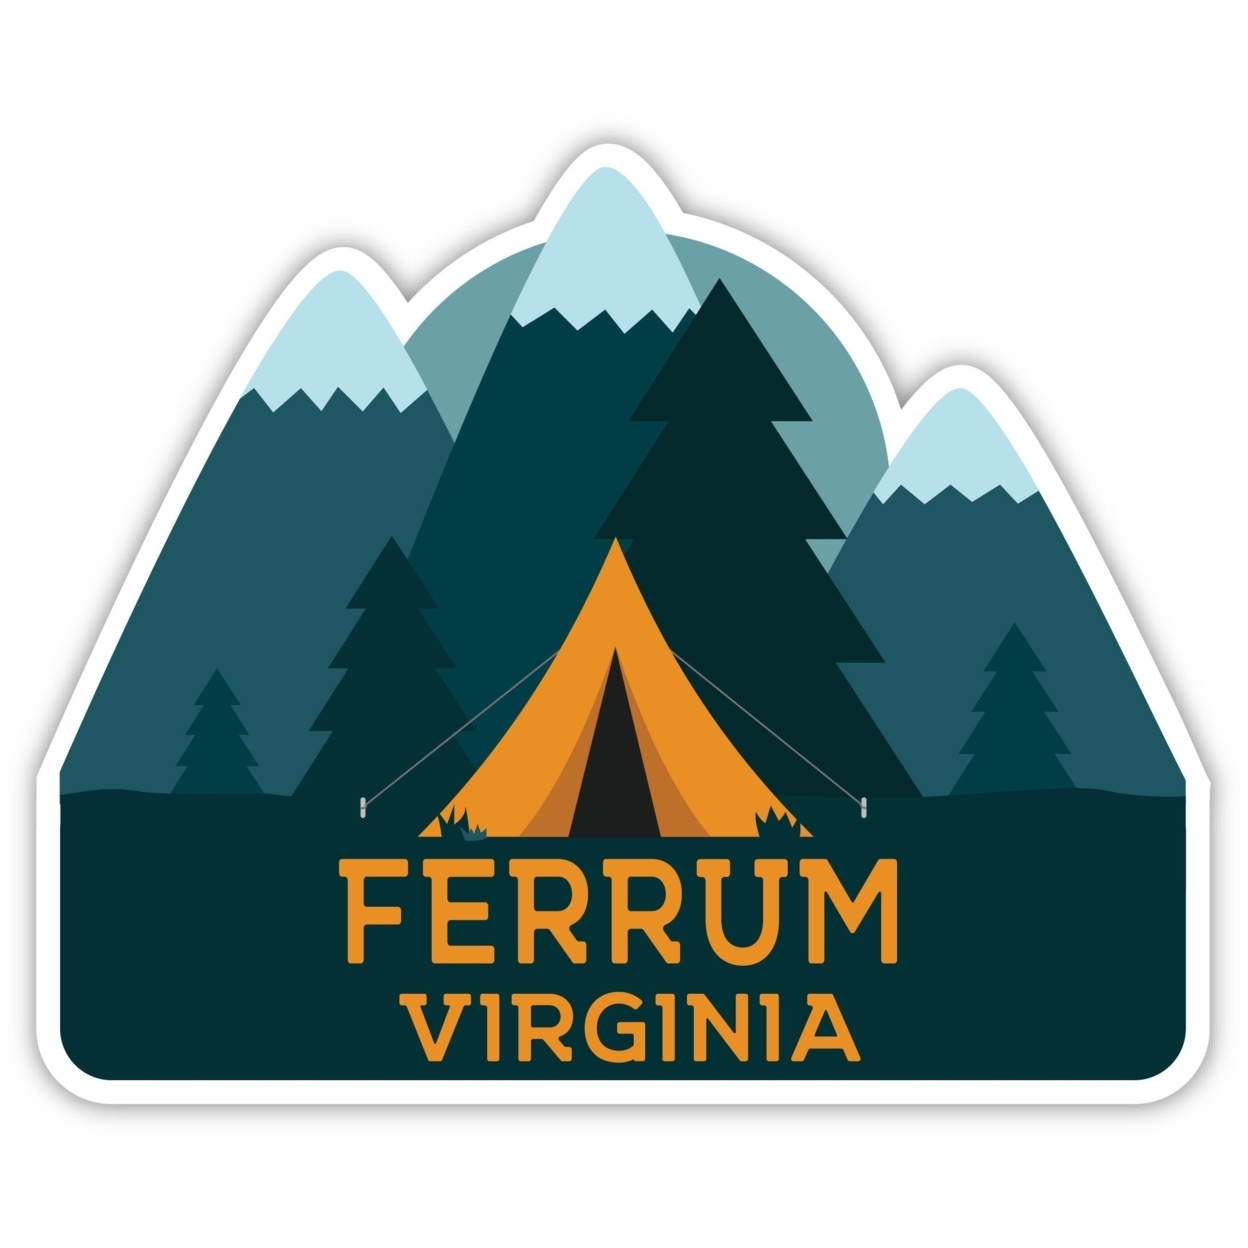 Ferrum Virginia Souvenir Decorative Stickers (Choose Theme And Size) - Single Unit, 4-Inch, Tent